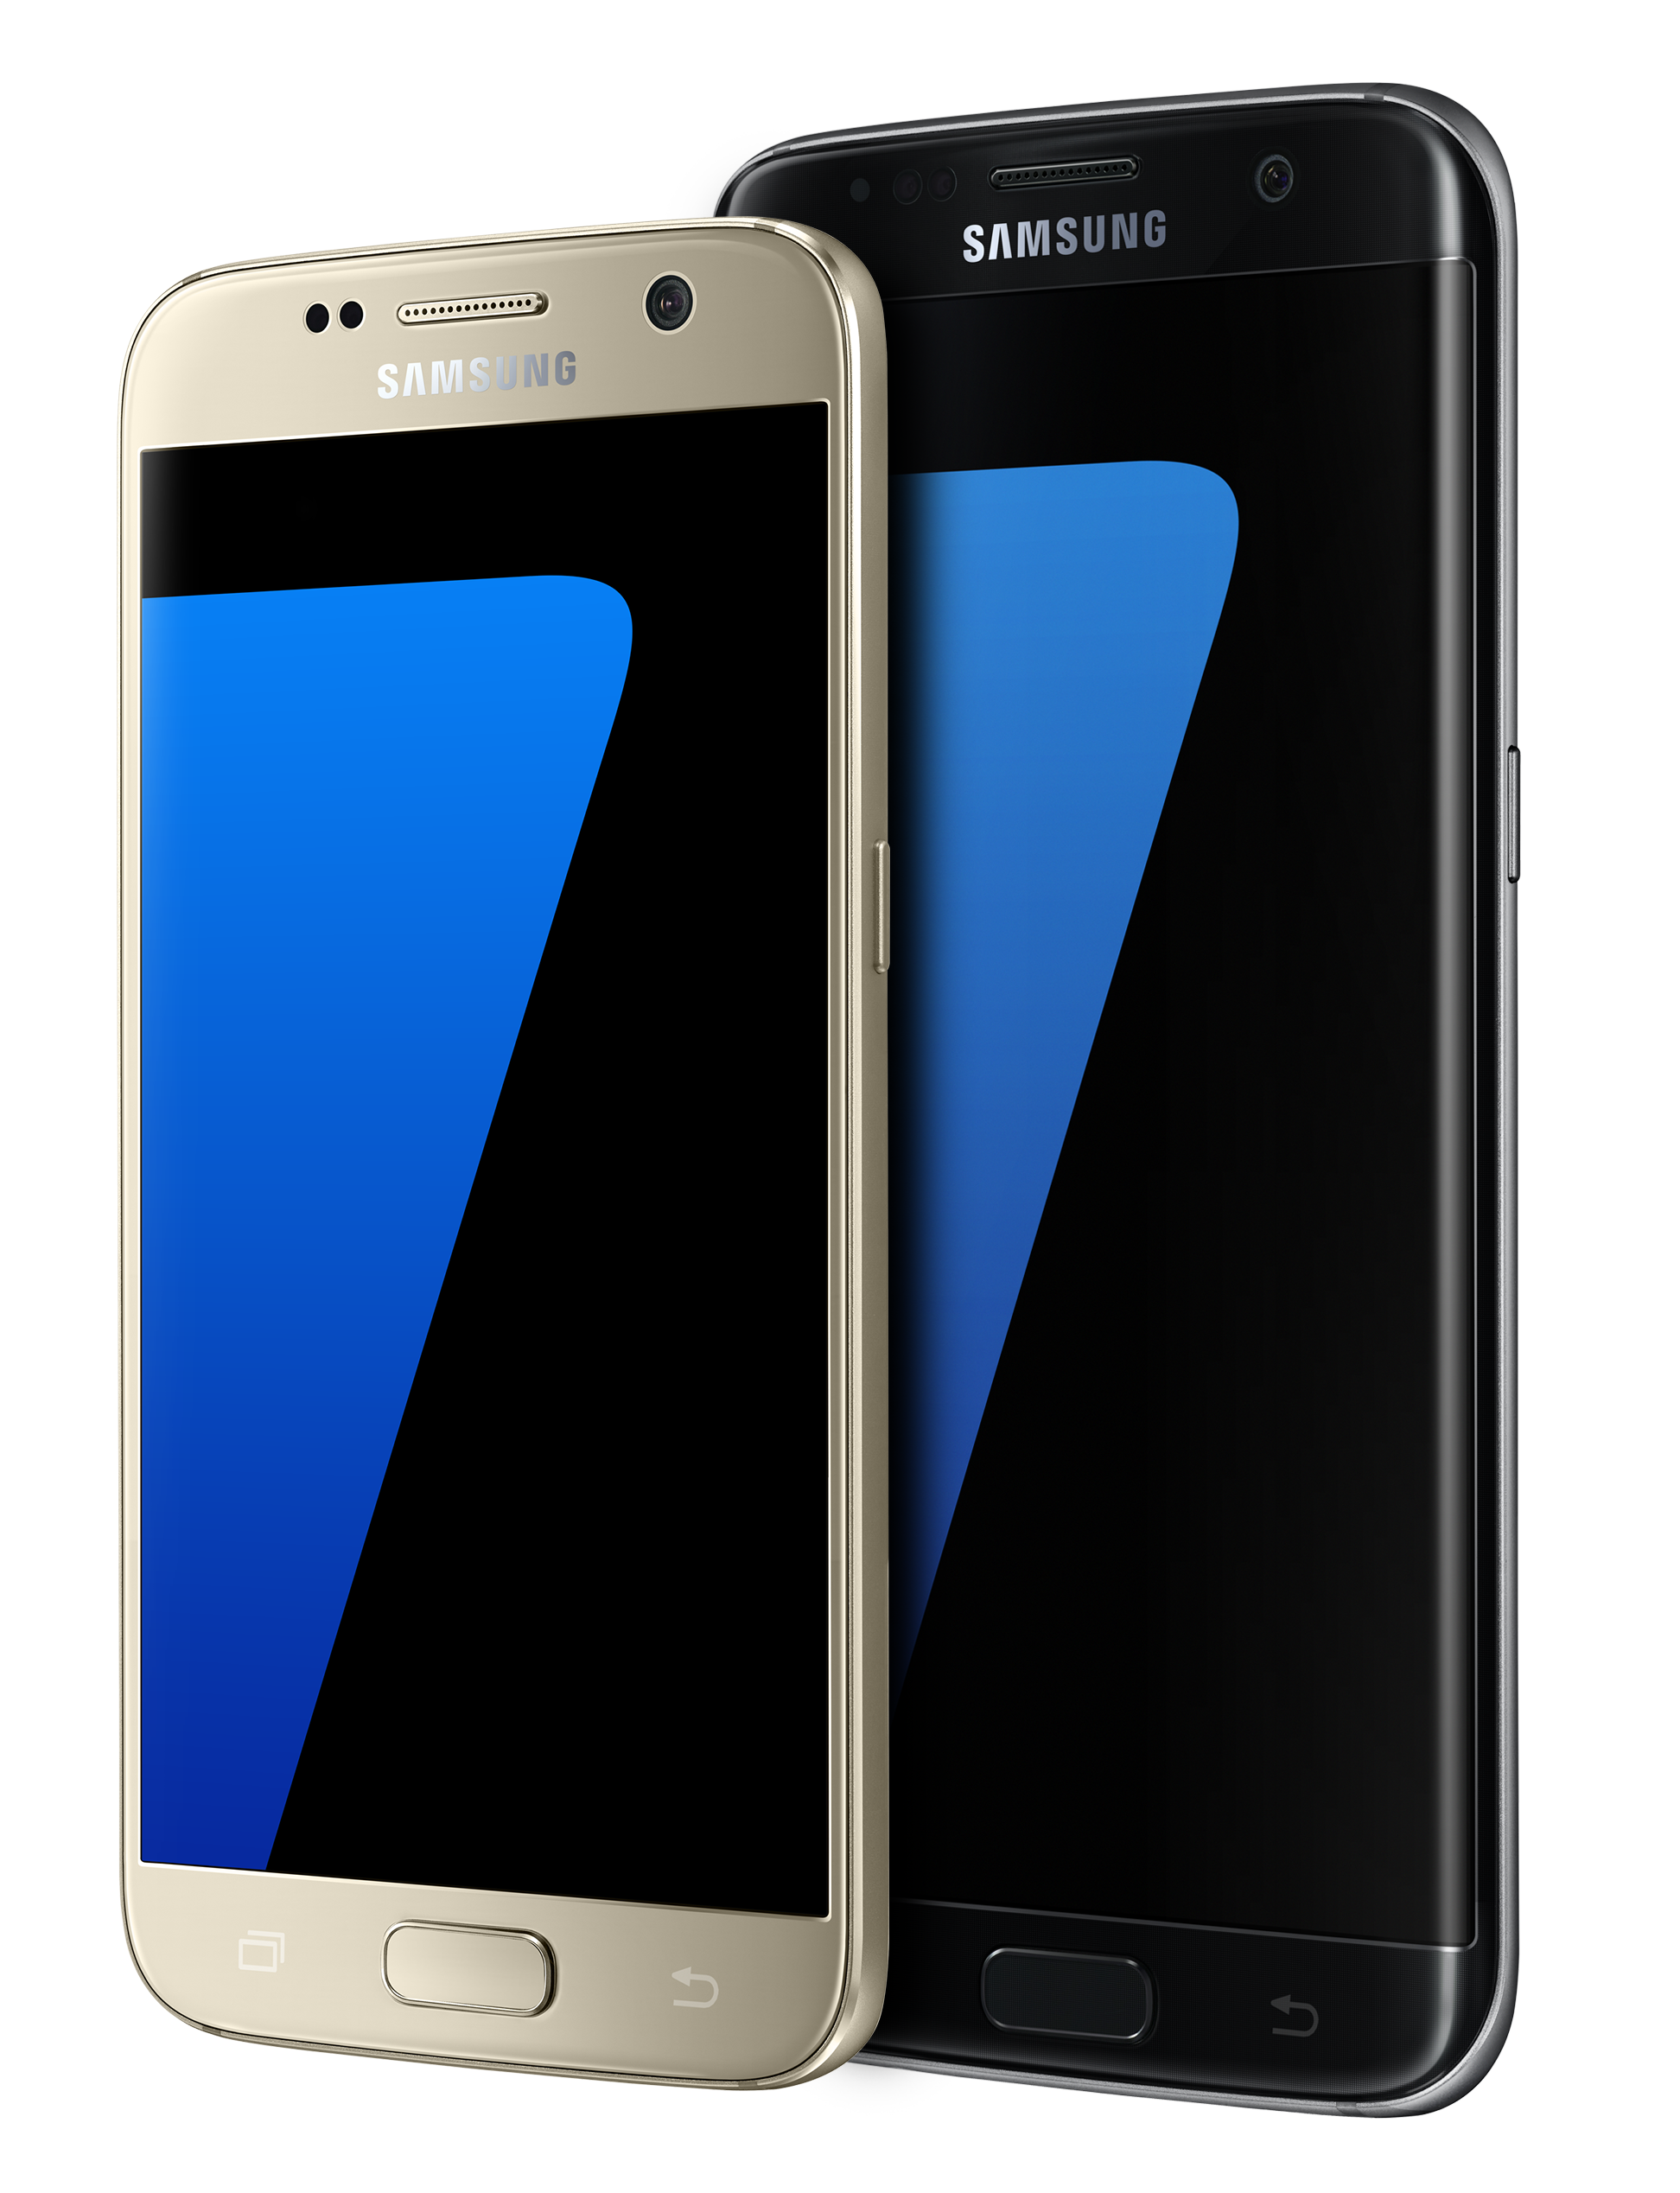 Galaxy S7 Edge Screen Overlay Fix - Fix Galaxy S7 or Edge Overheating ...